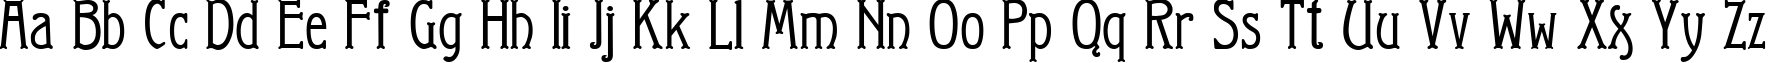 Пример написания английского алфавита шрифтом Arkhive